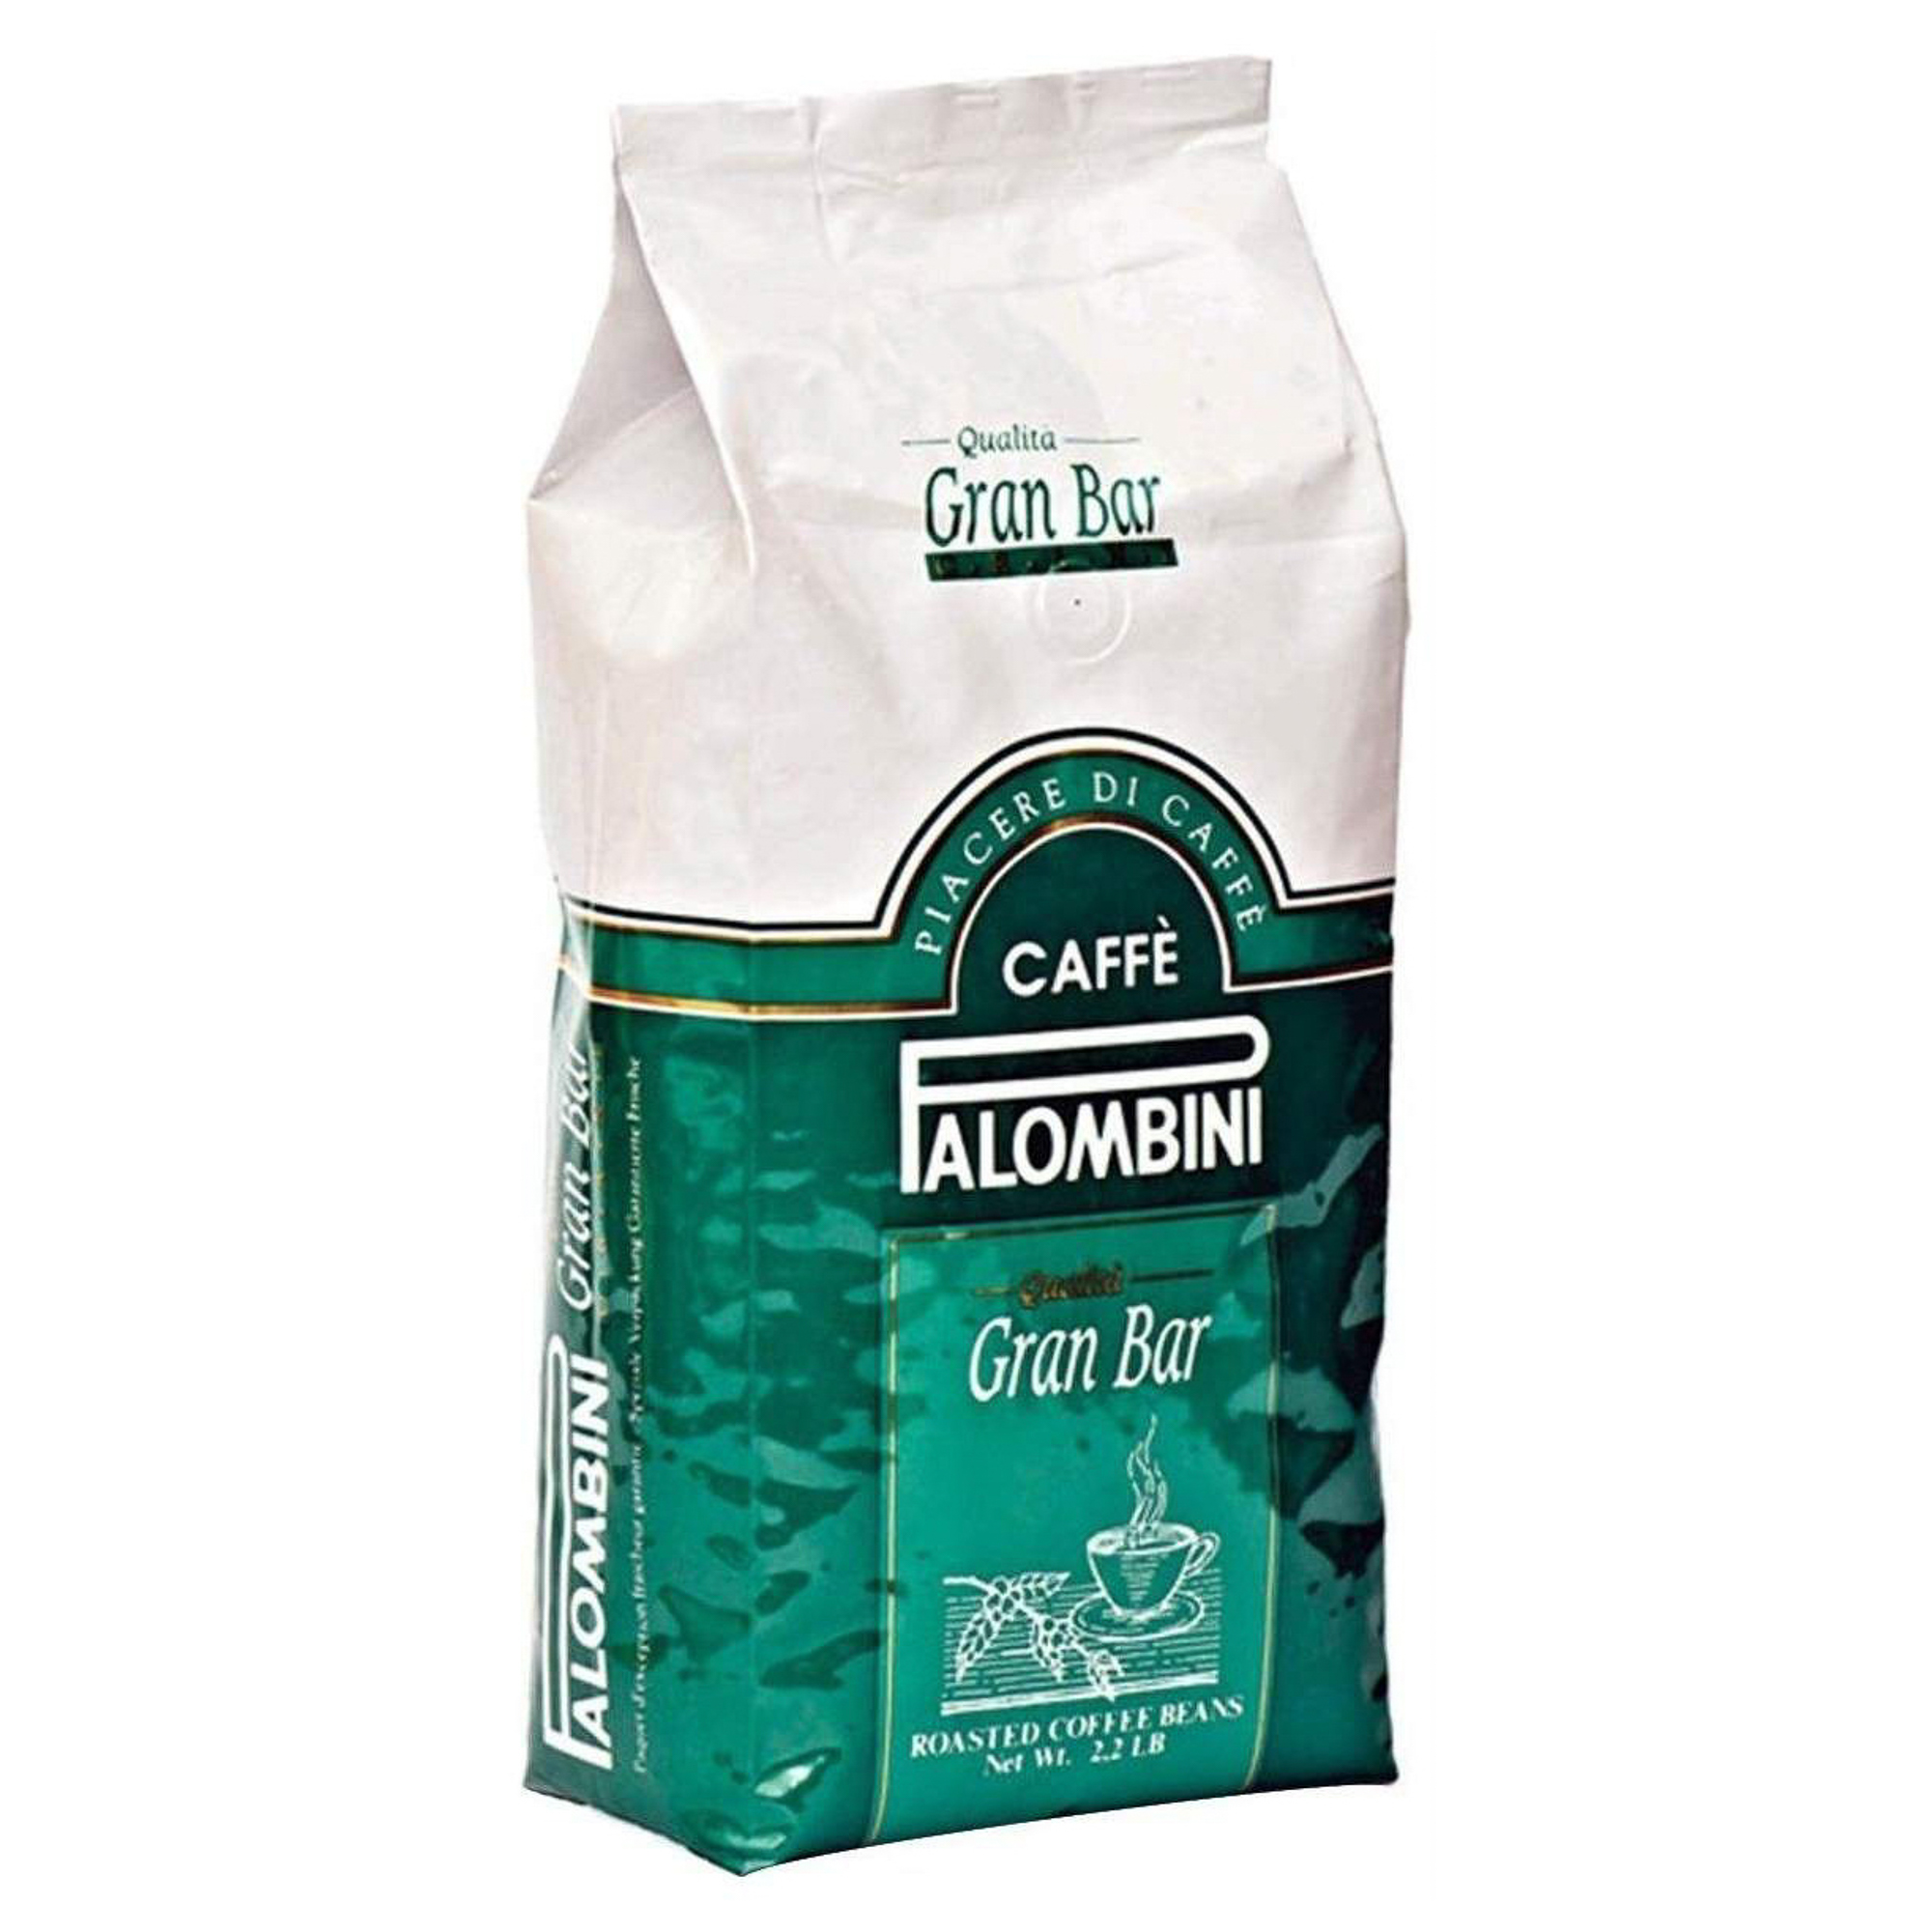 цена Кофе в зернах Palombini Gran Bar 1 кг